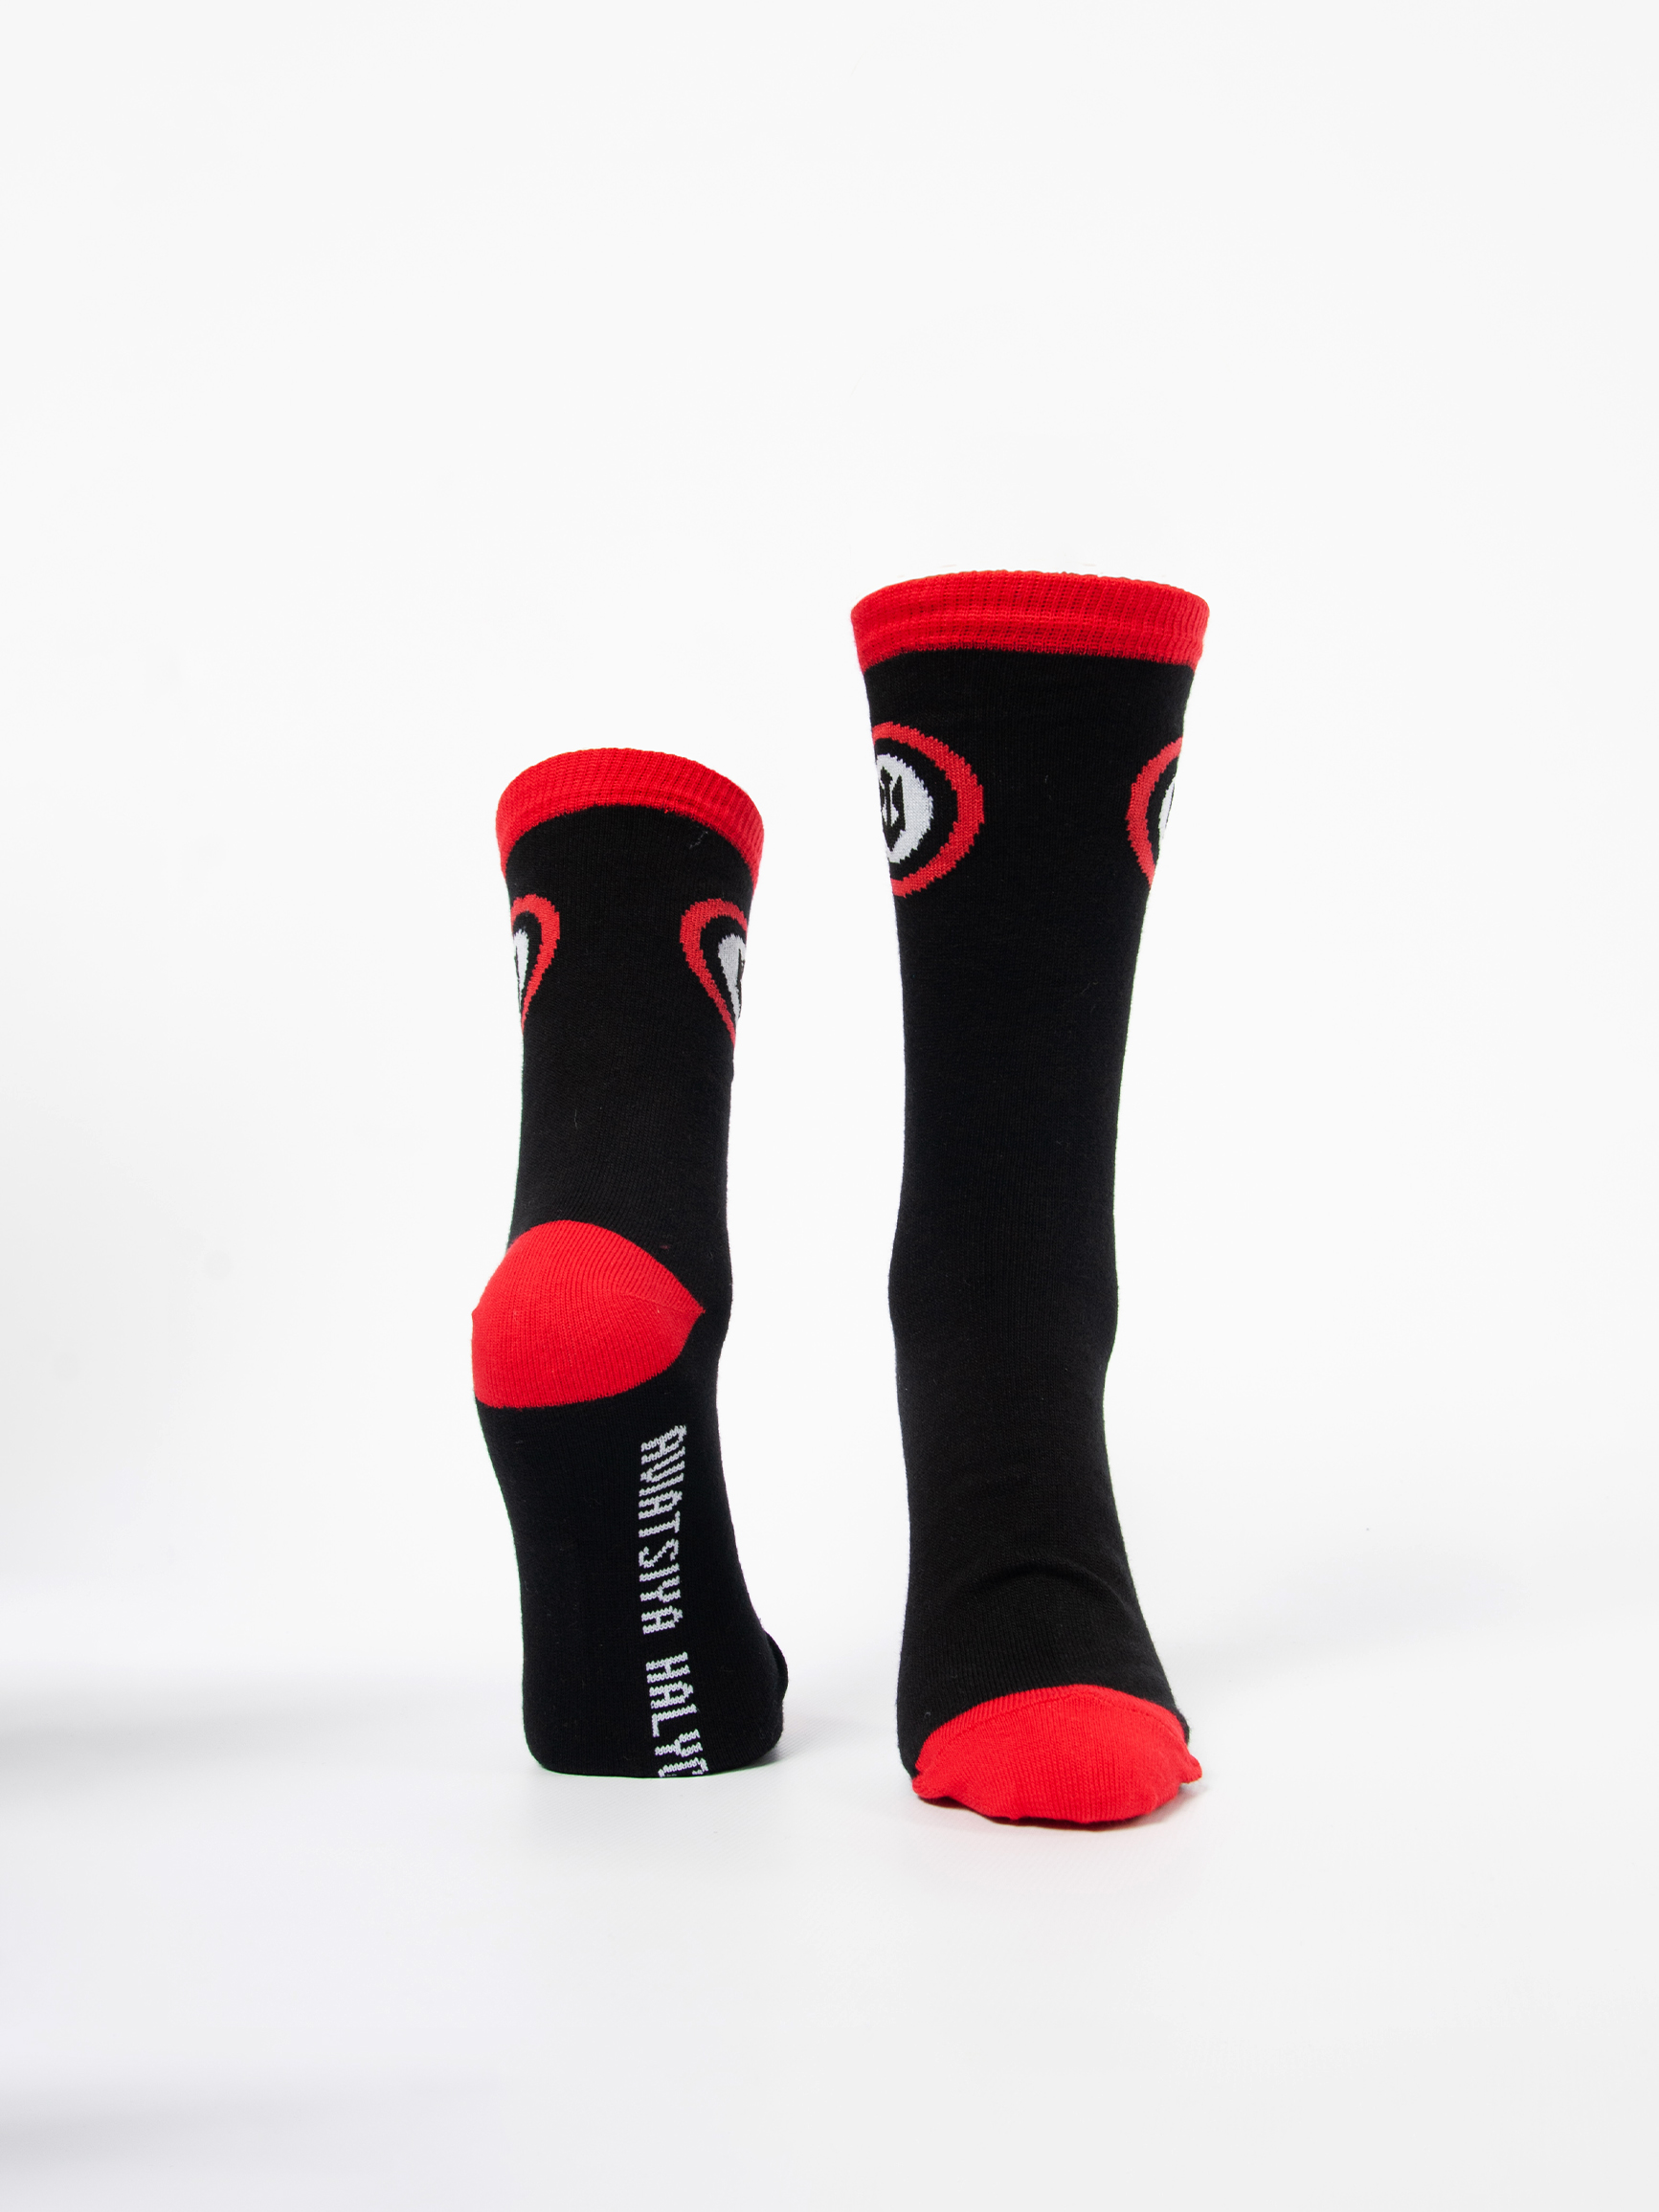 Socks Roundel. Color black. Socks: unisex, well suited for both boys and girls.